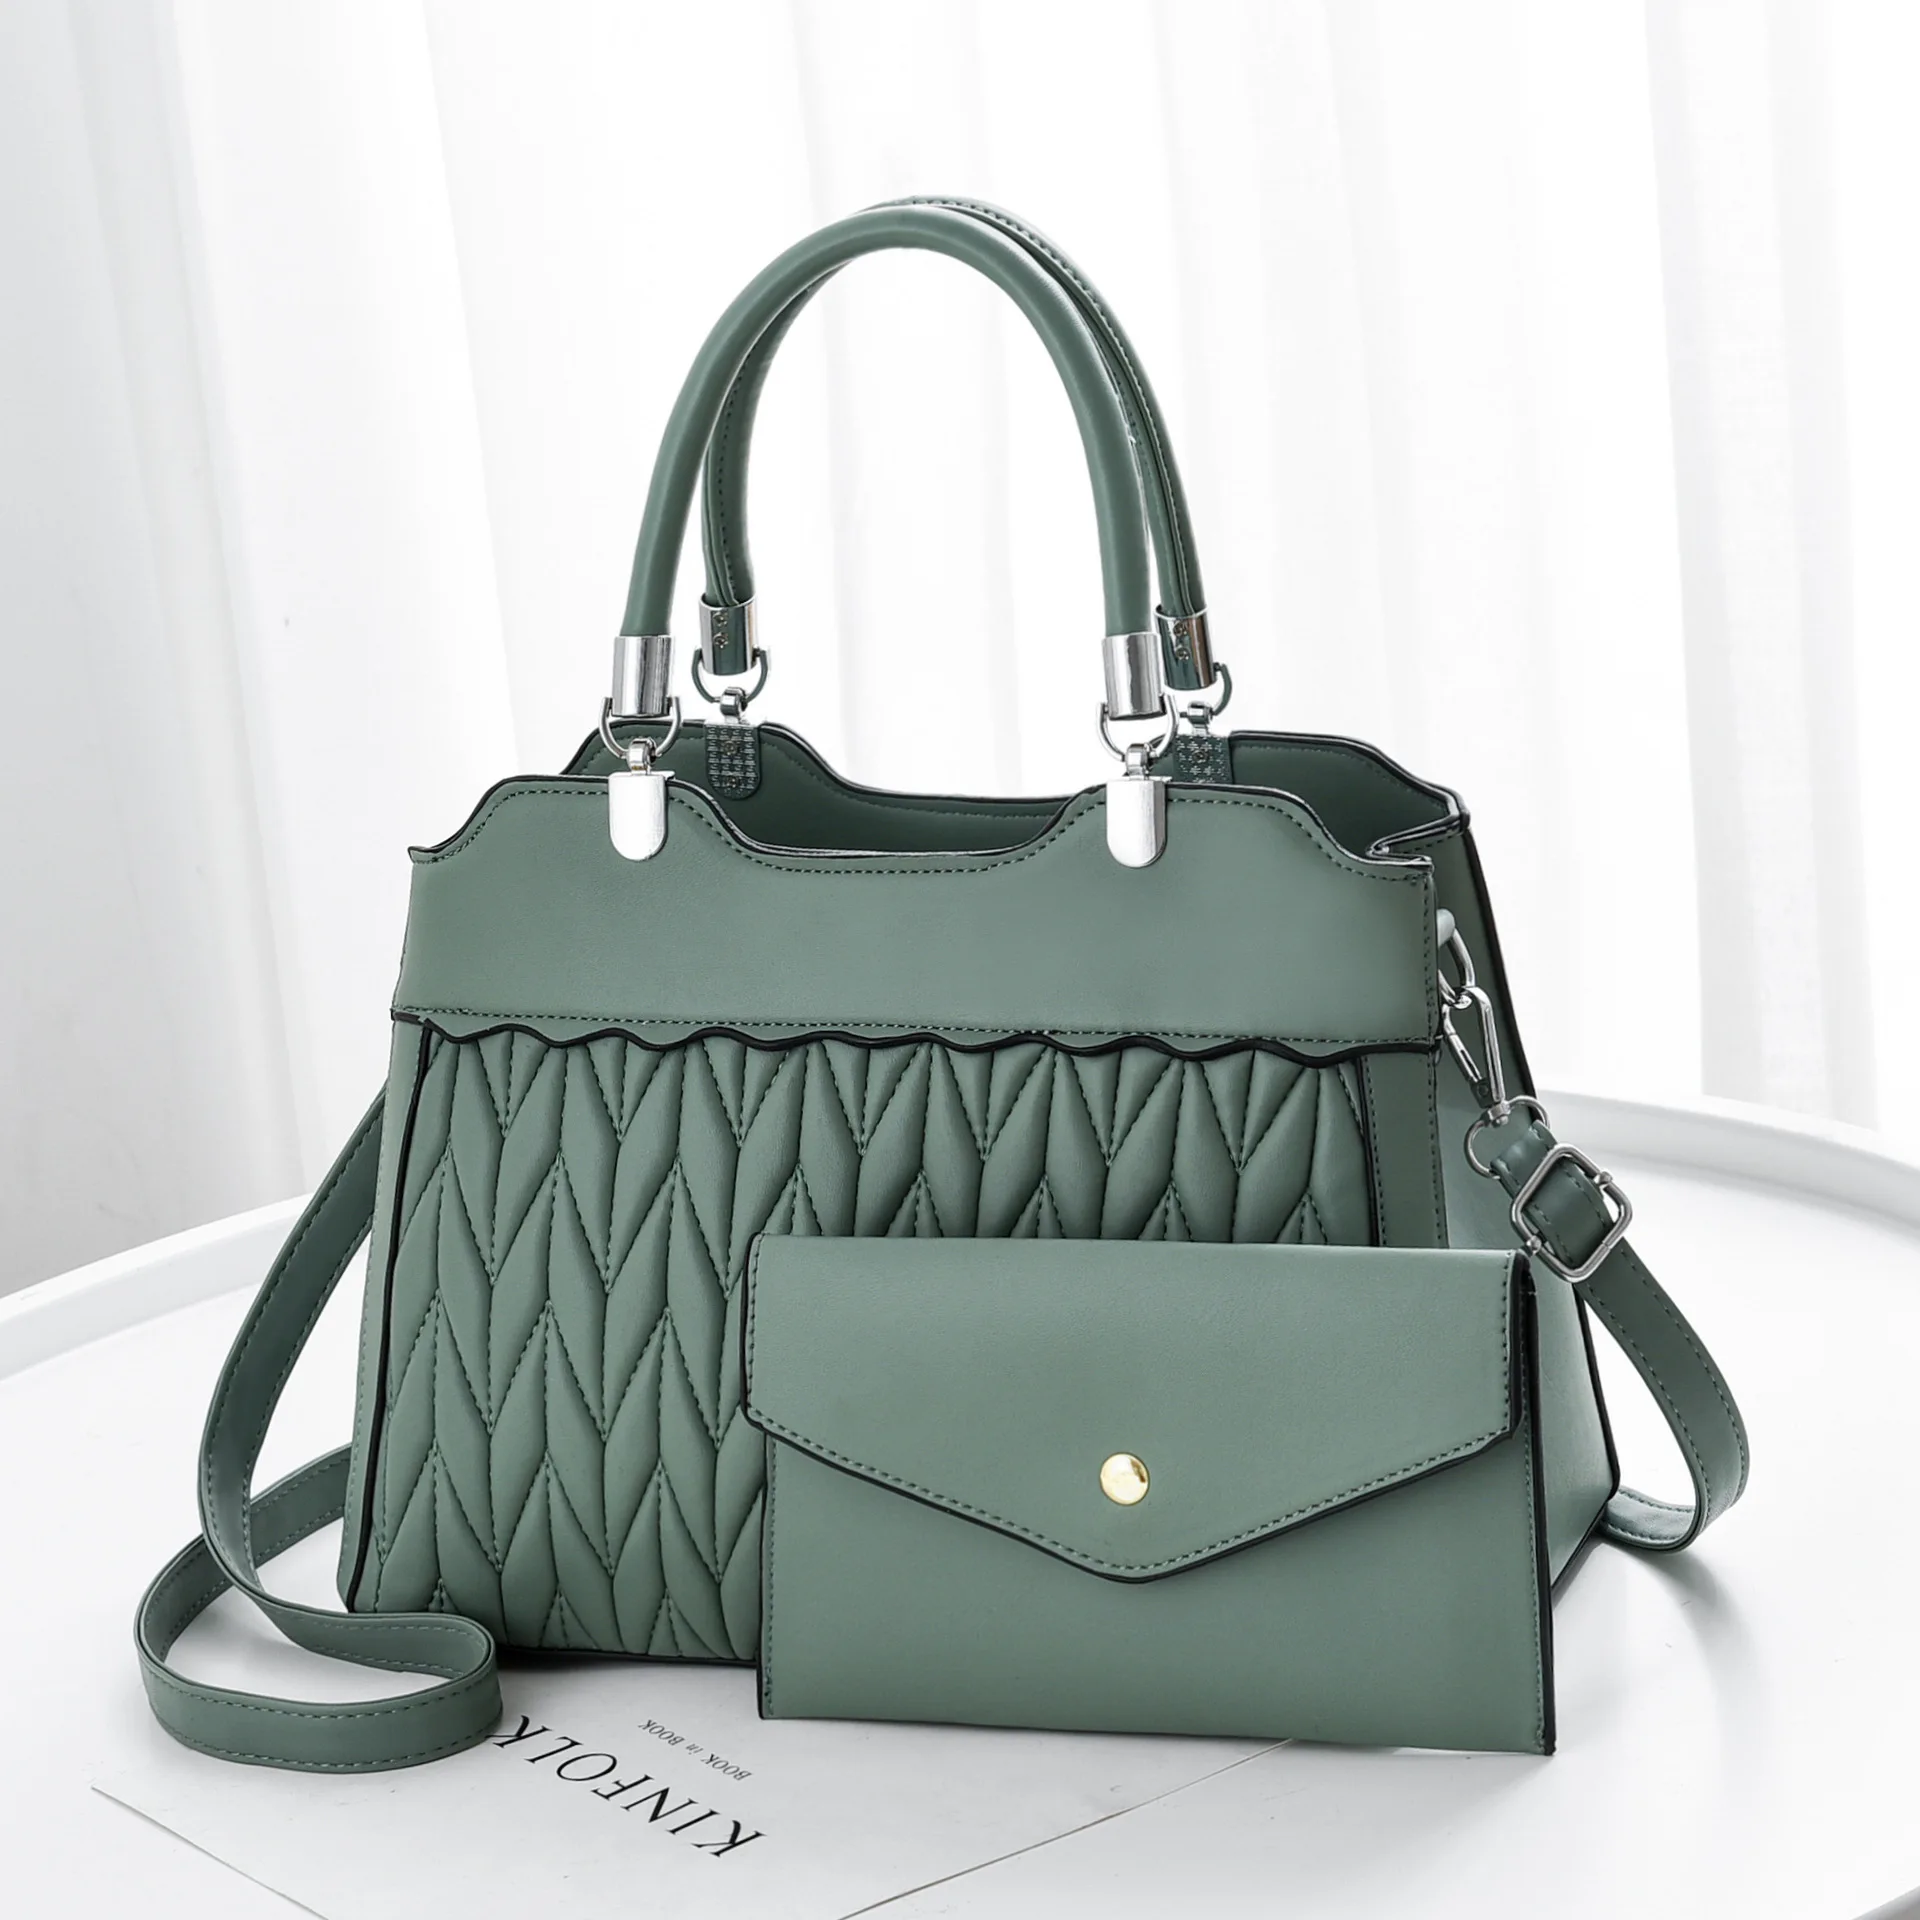 

2021 2pcs Handbag Fancy Style Fashion Ladies Handbags Sets Women PU Leather Hand Bags, 6colors